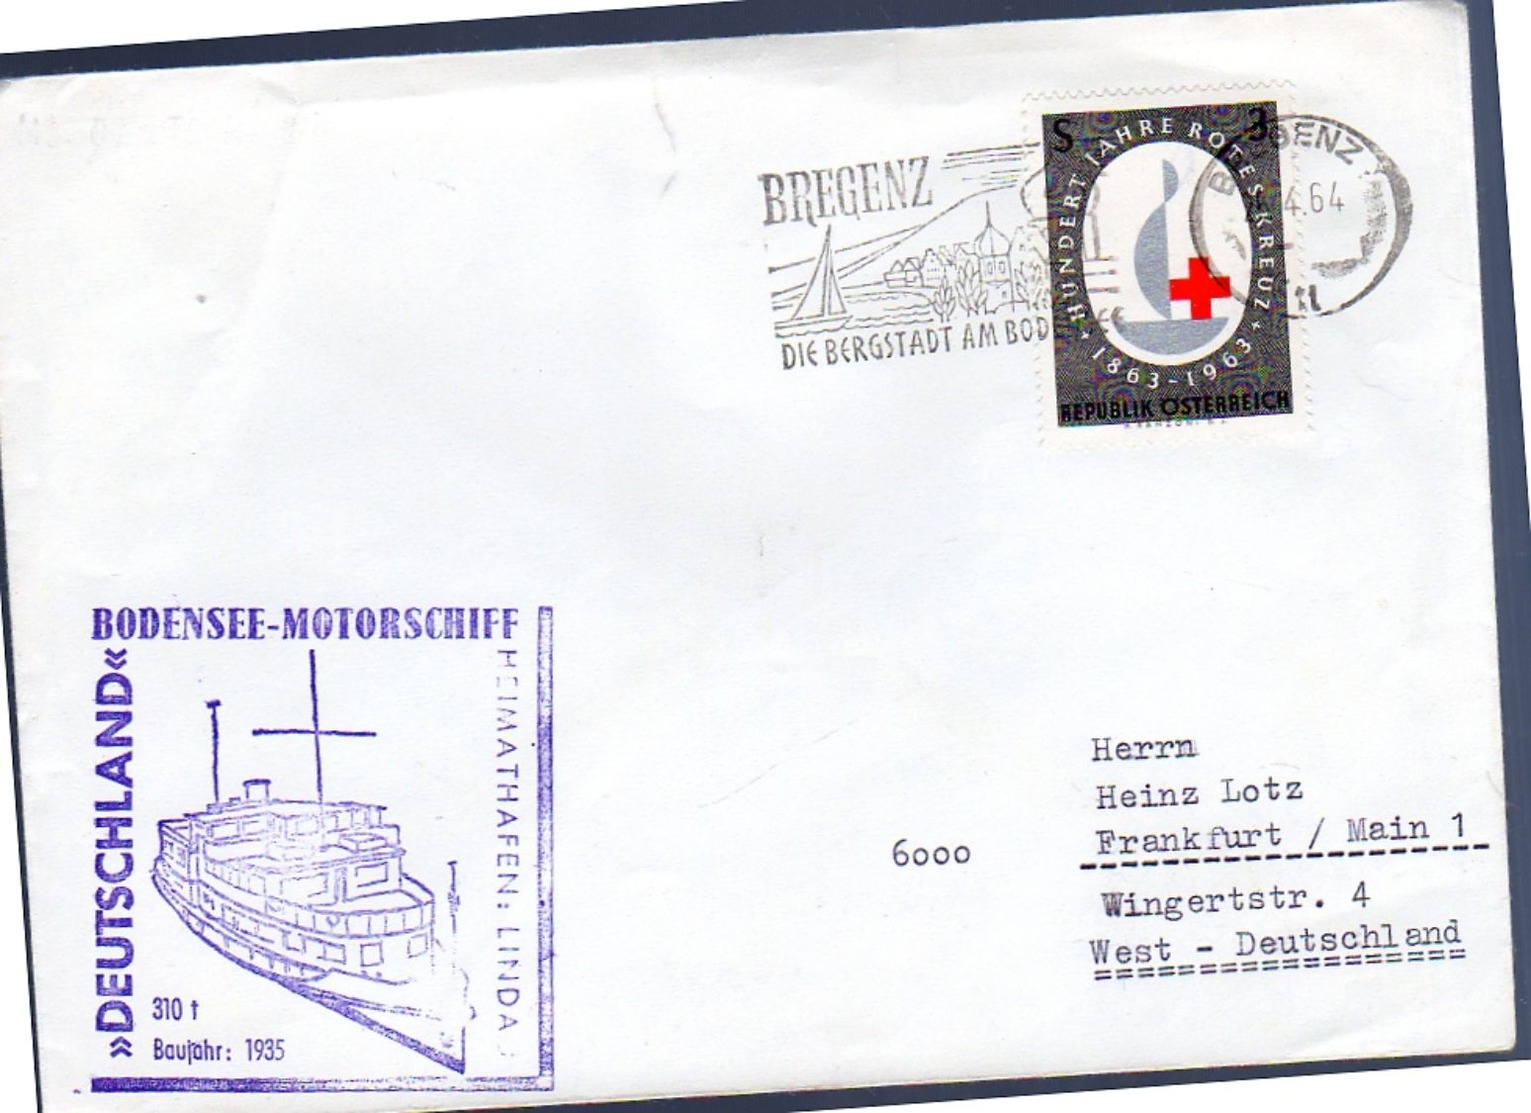 1964 Bodensee-Motorschiff Deutschland, Linda (305) - Covers & Documents